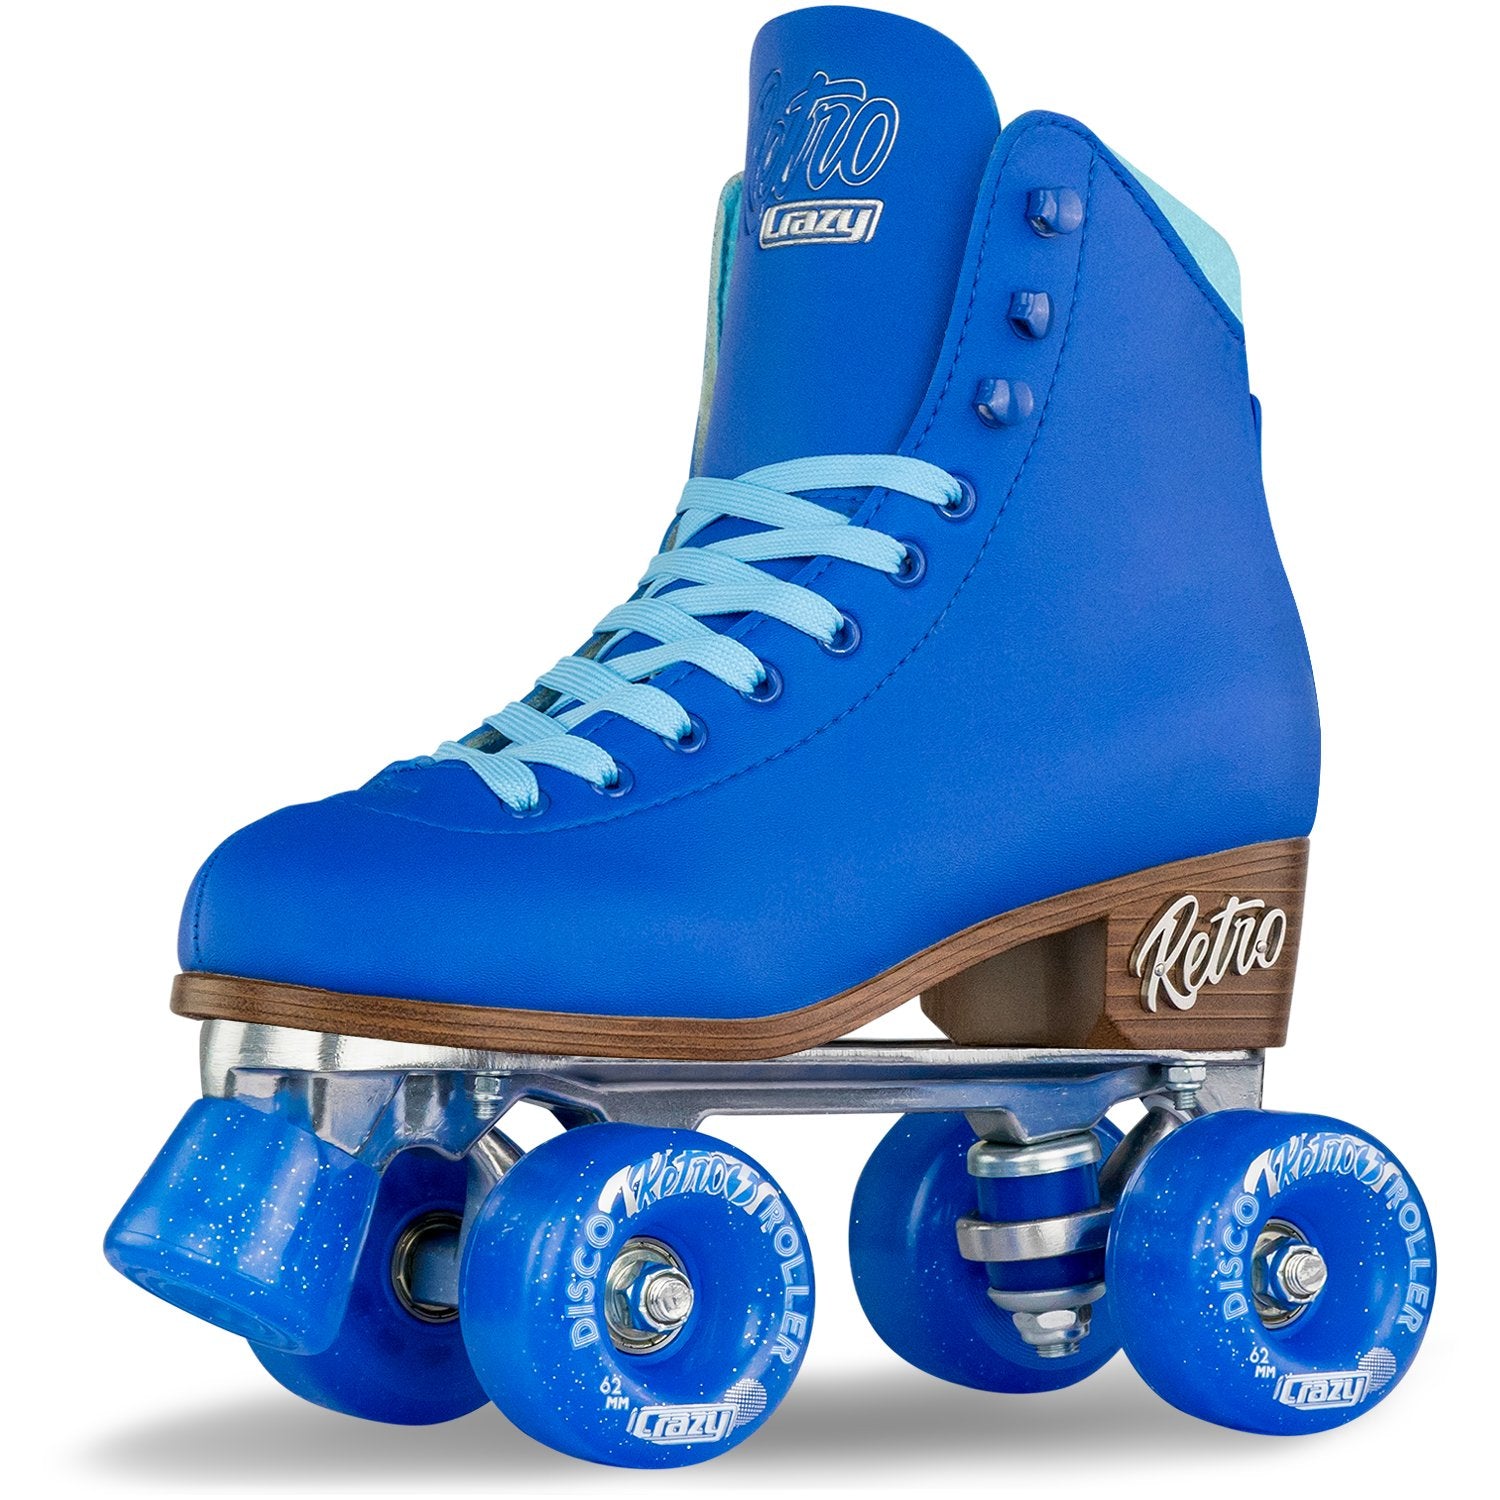 Crazy Skates Classic Vintage Retro Roller Skates - Blue - Momma Trucker Skates